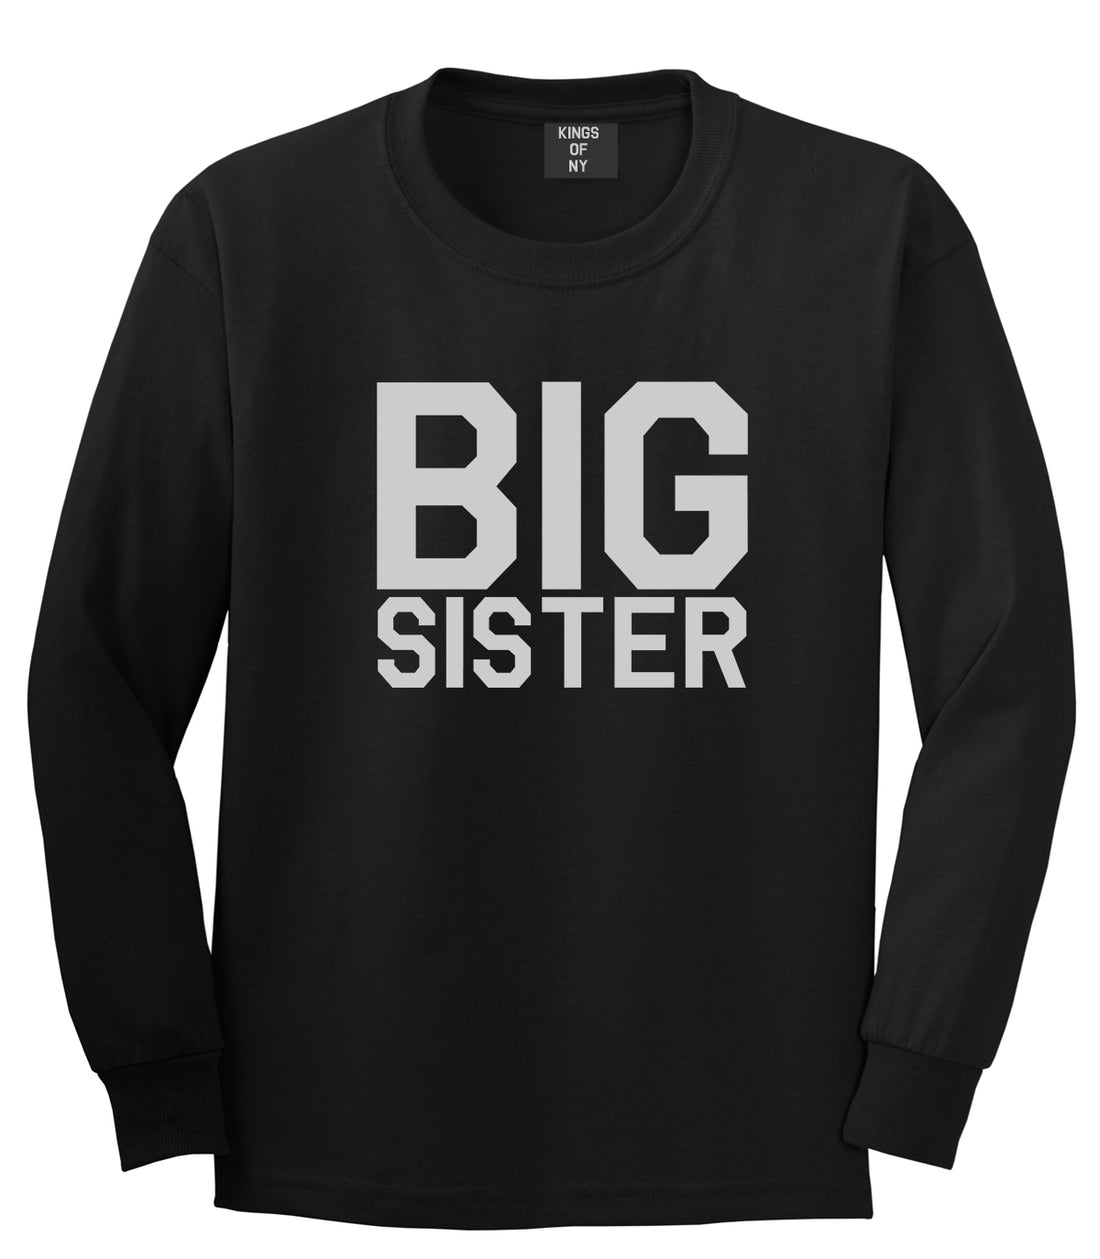 Big Sister Black Long Sleeve T-Shirt by Kings Of NY